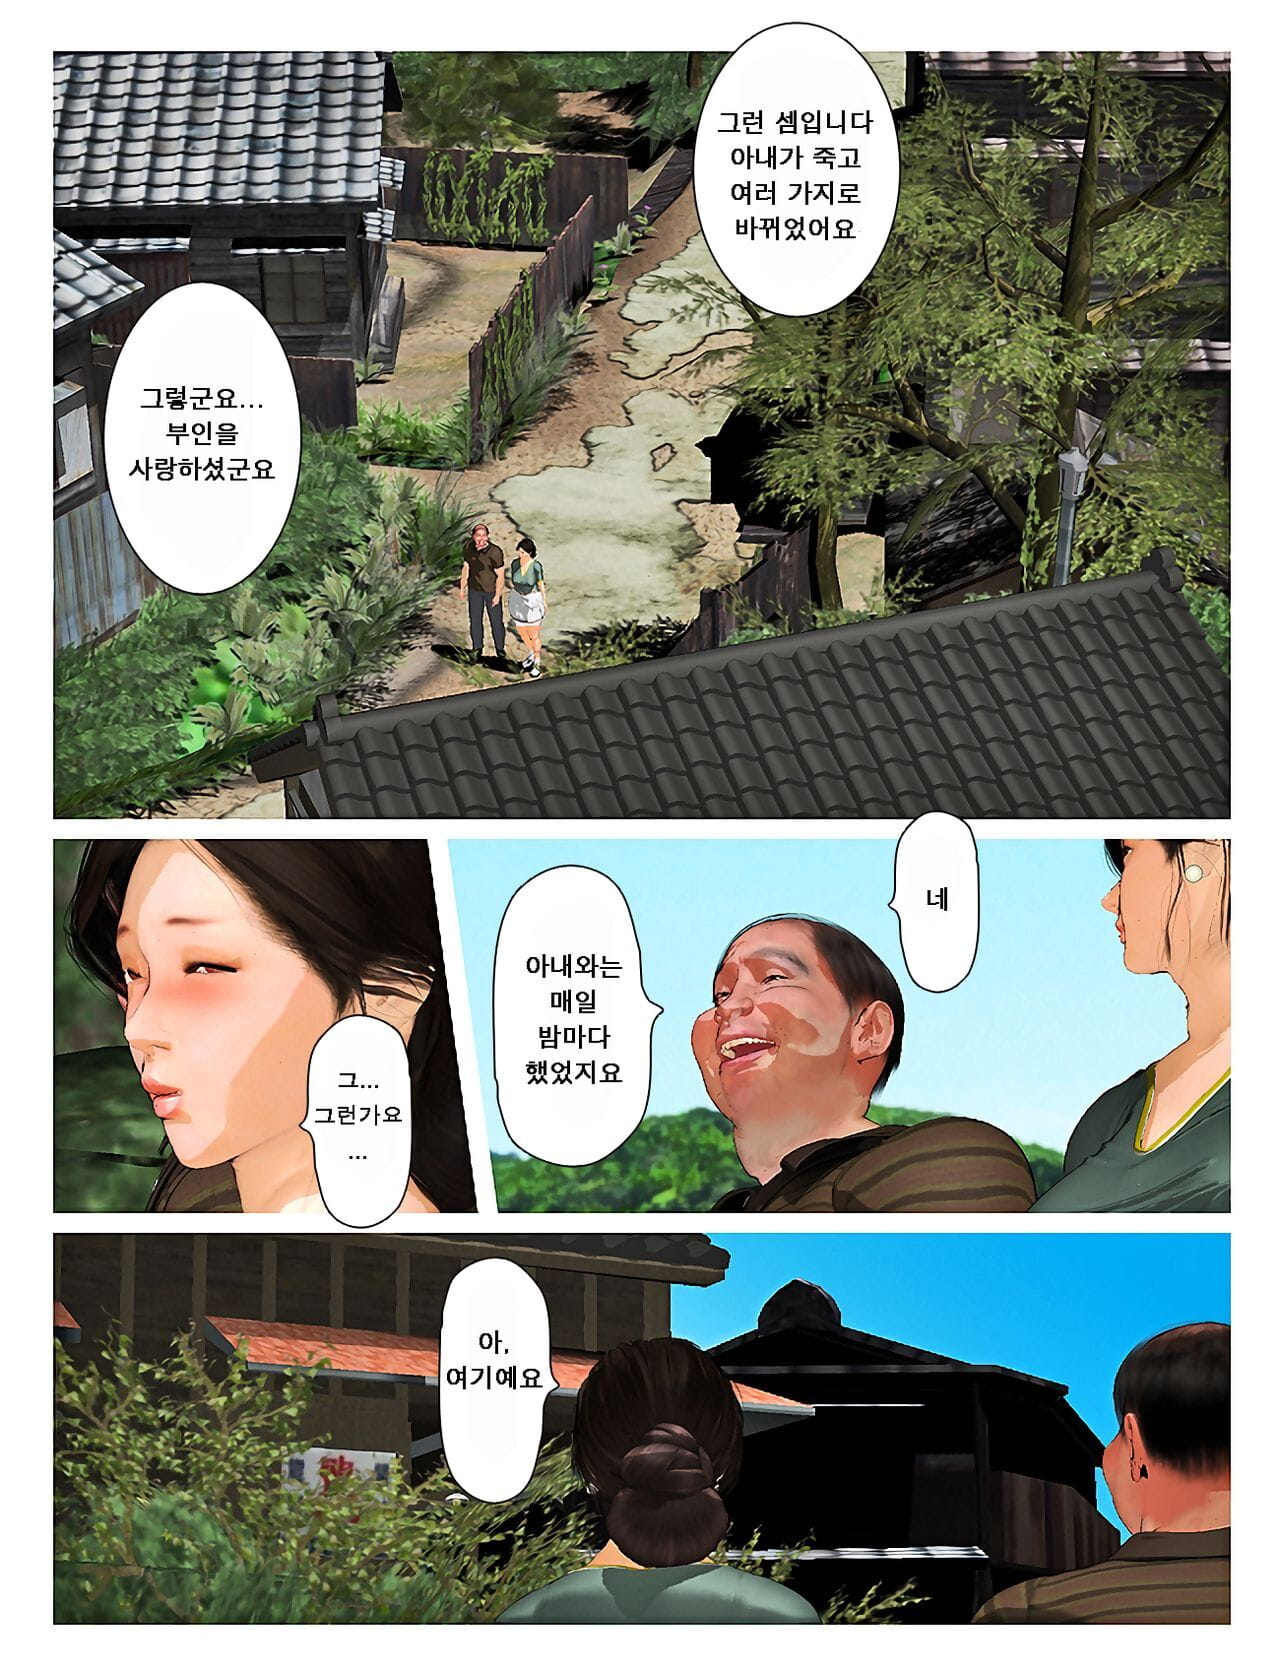 kyou nenhum misako san 2019:2 오늘의 미사코씨 2019:2 page 1